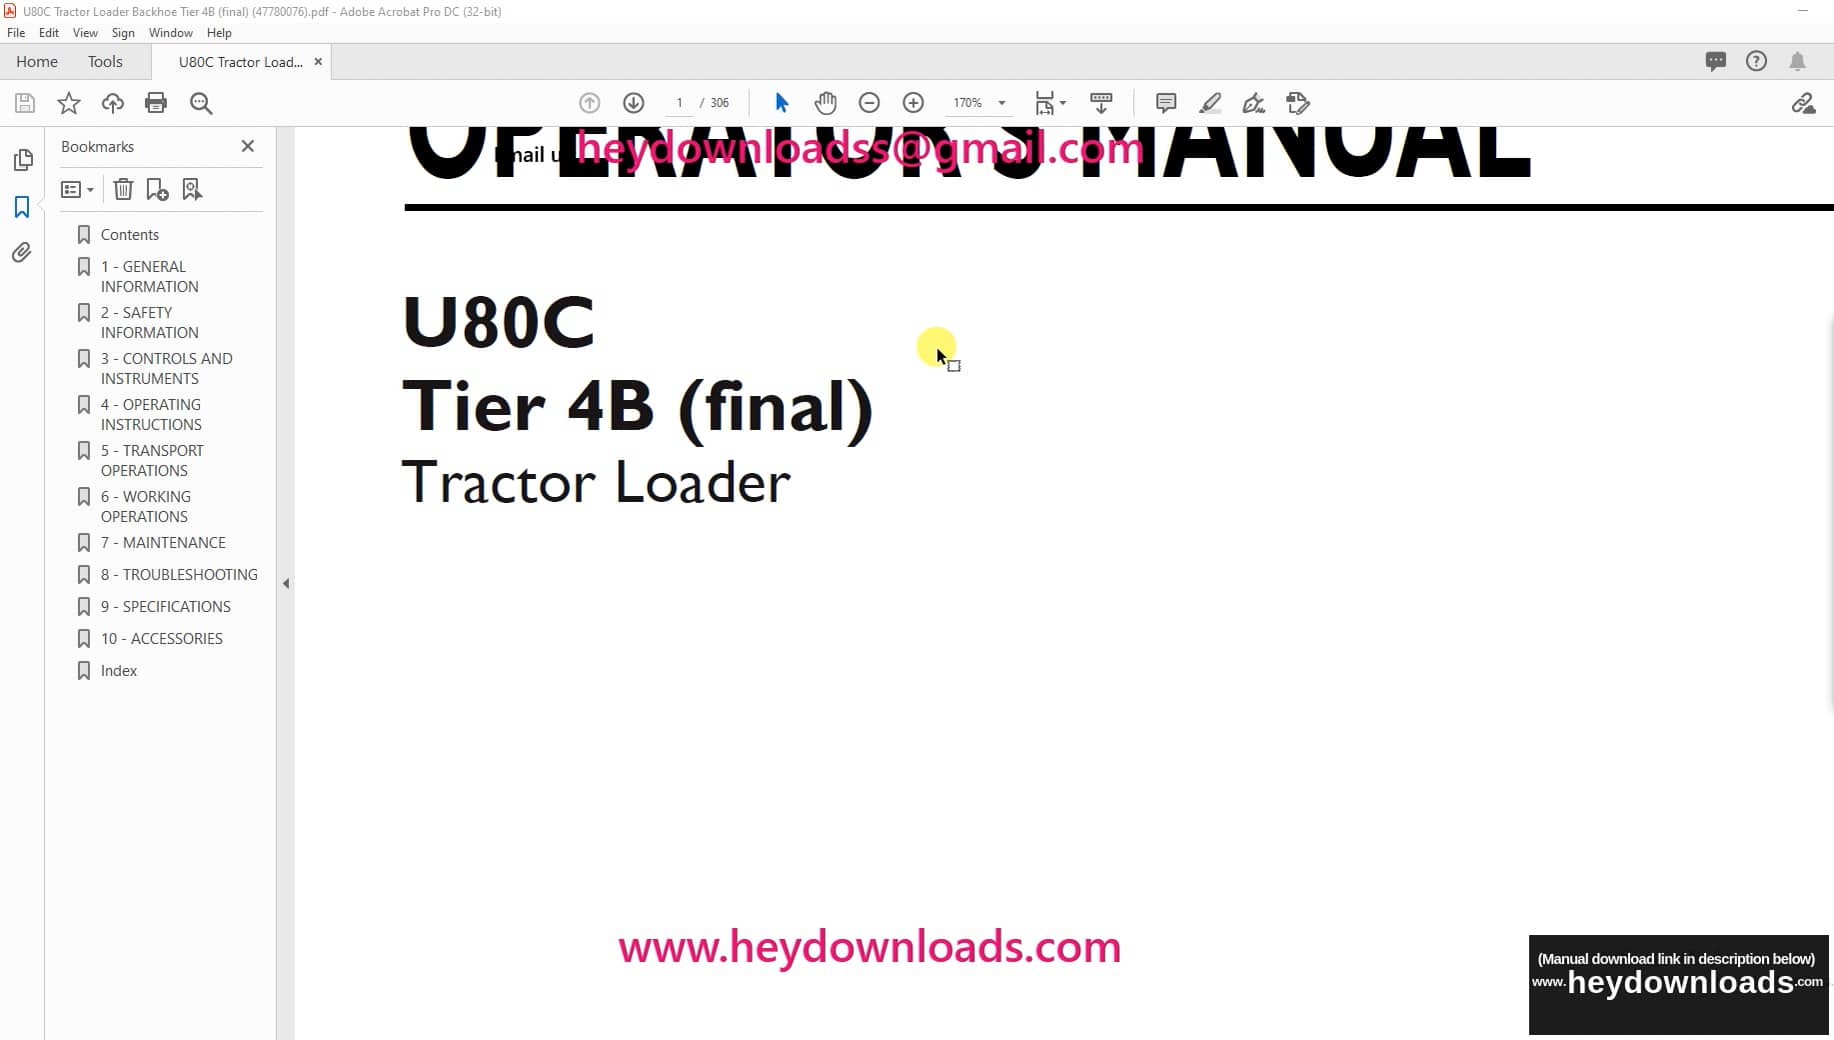 New Holland U80C Tier 4B (final) Tractor Loader Operator's Manual